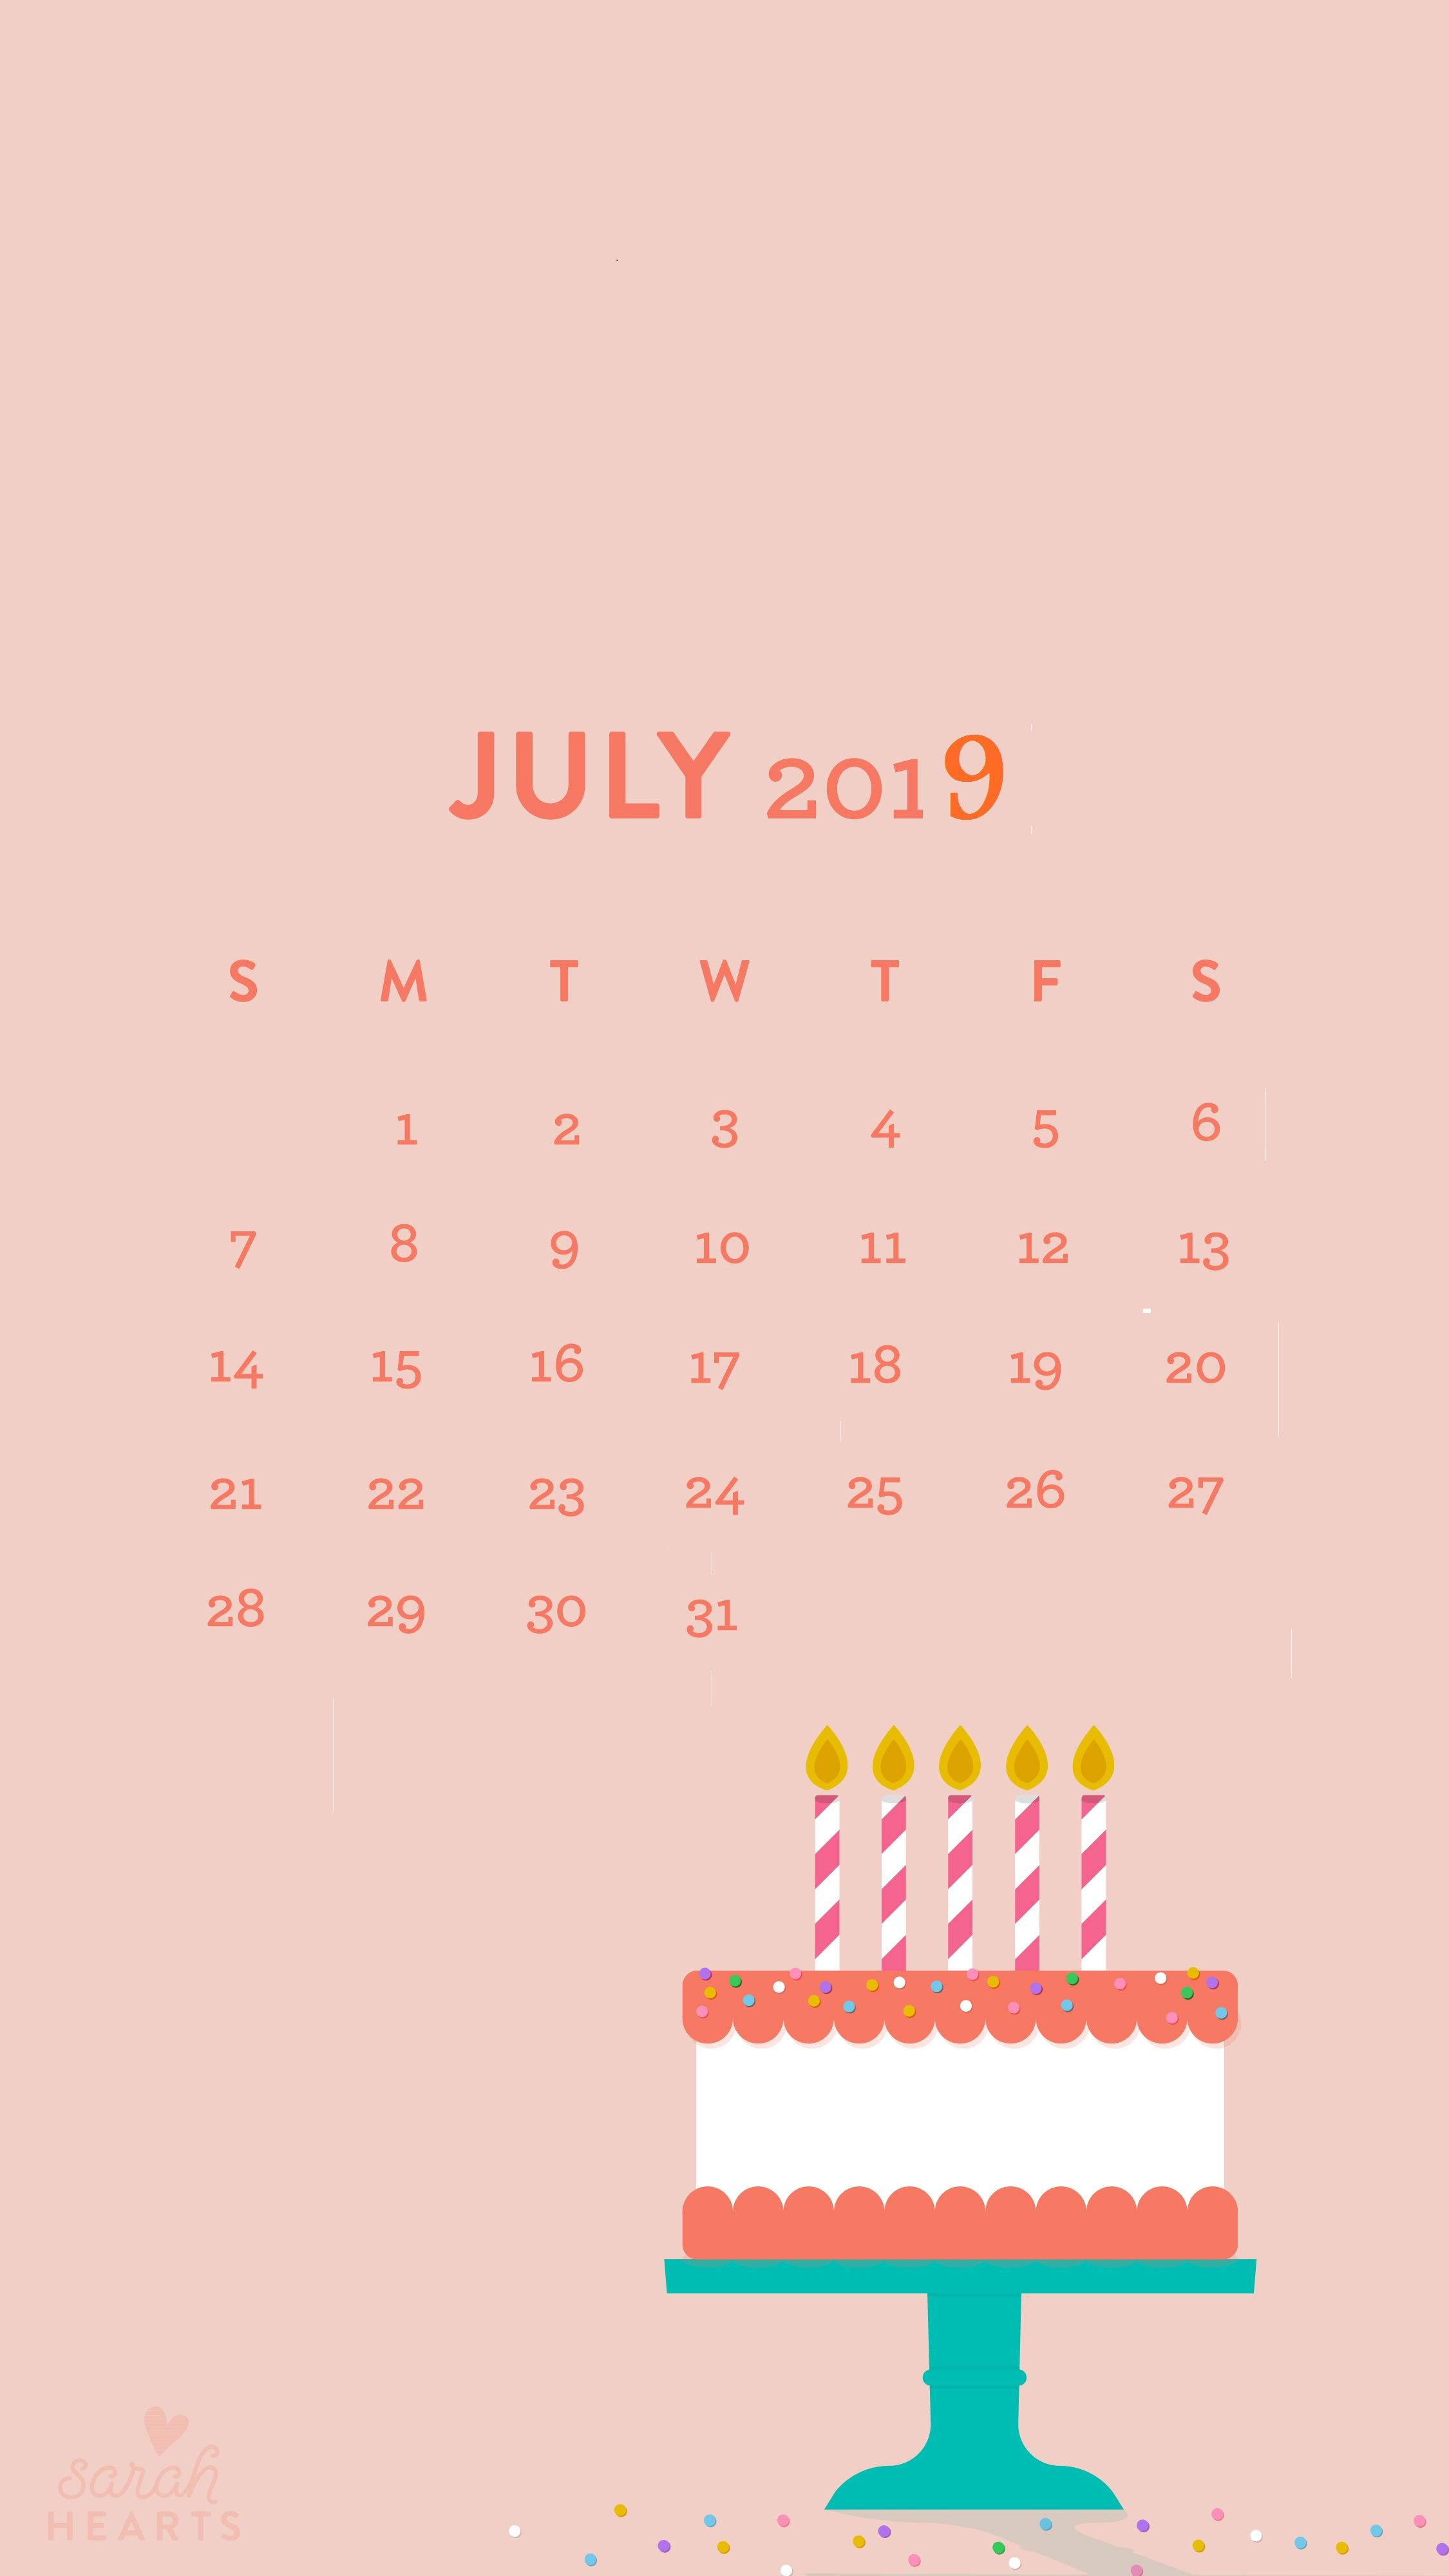 July 2019 Iphone Calendar Wallpaper In 2019 | Calendar